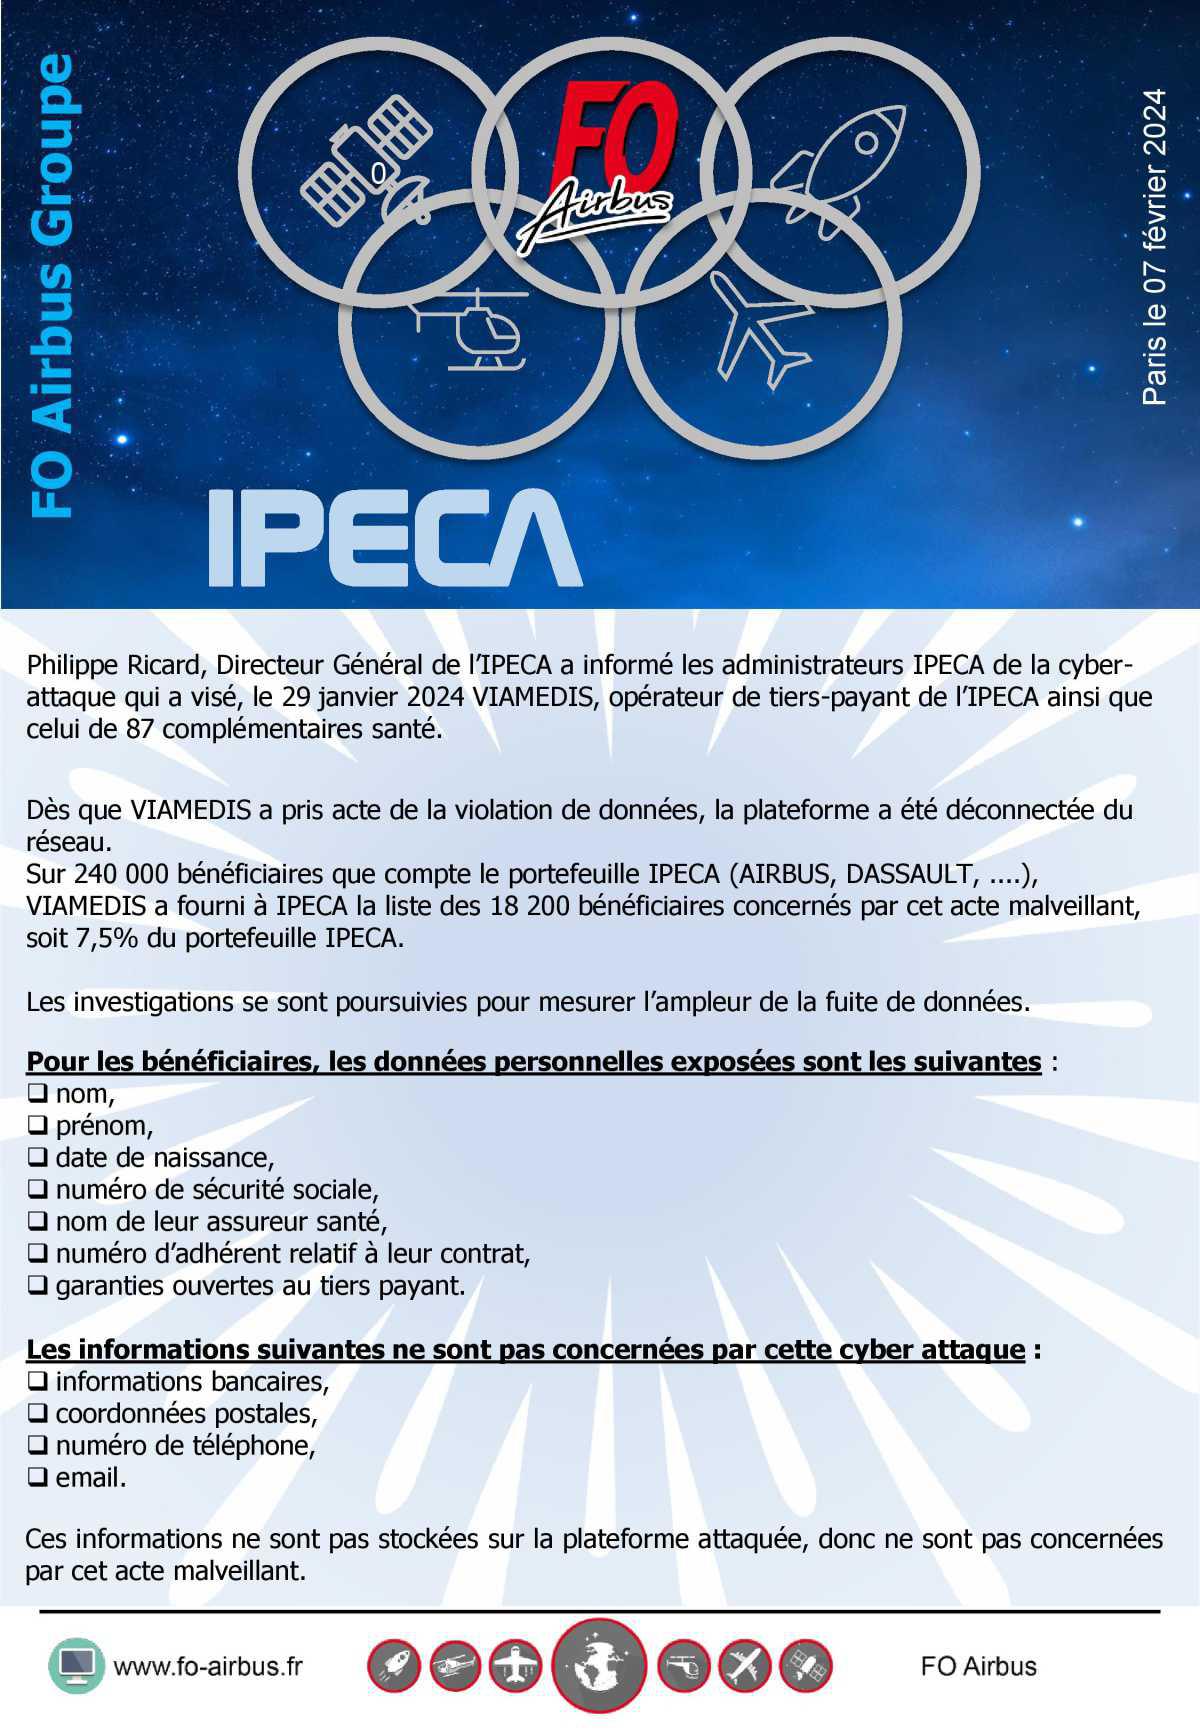 IPECA : cyber attaque sur Viamedis 